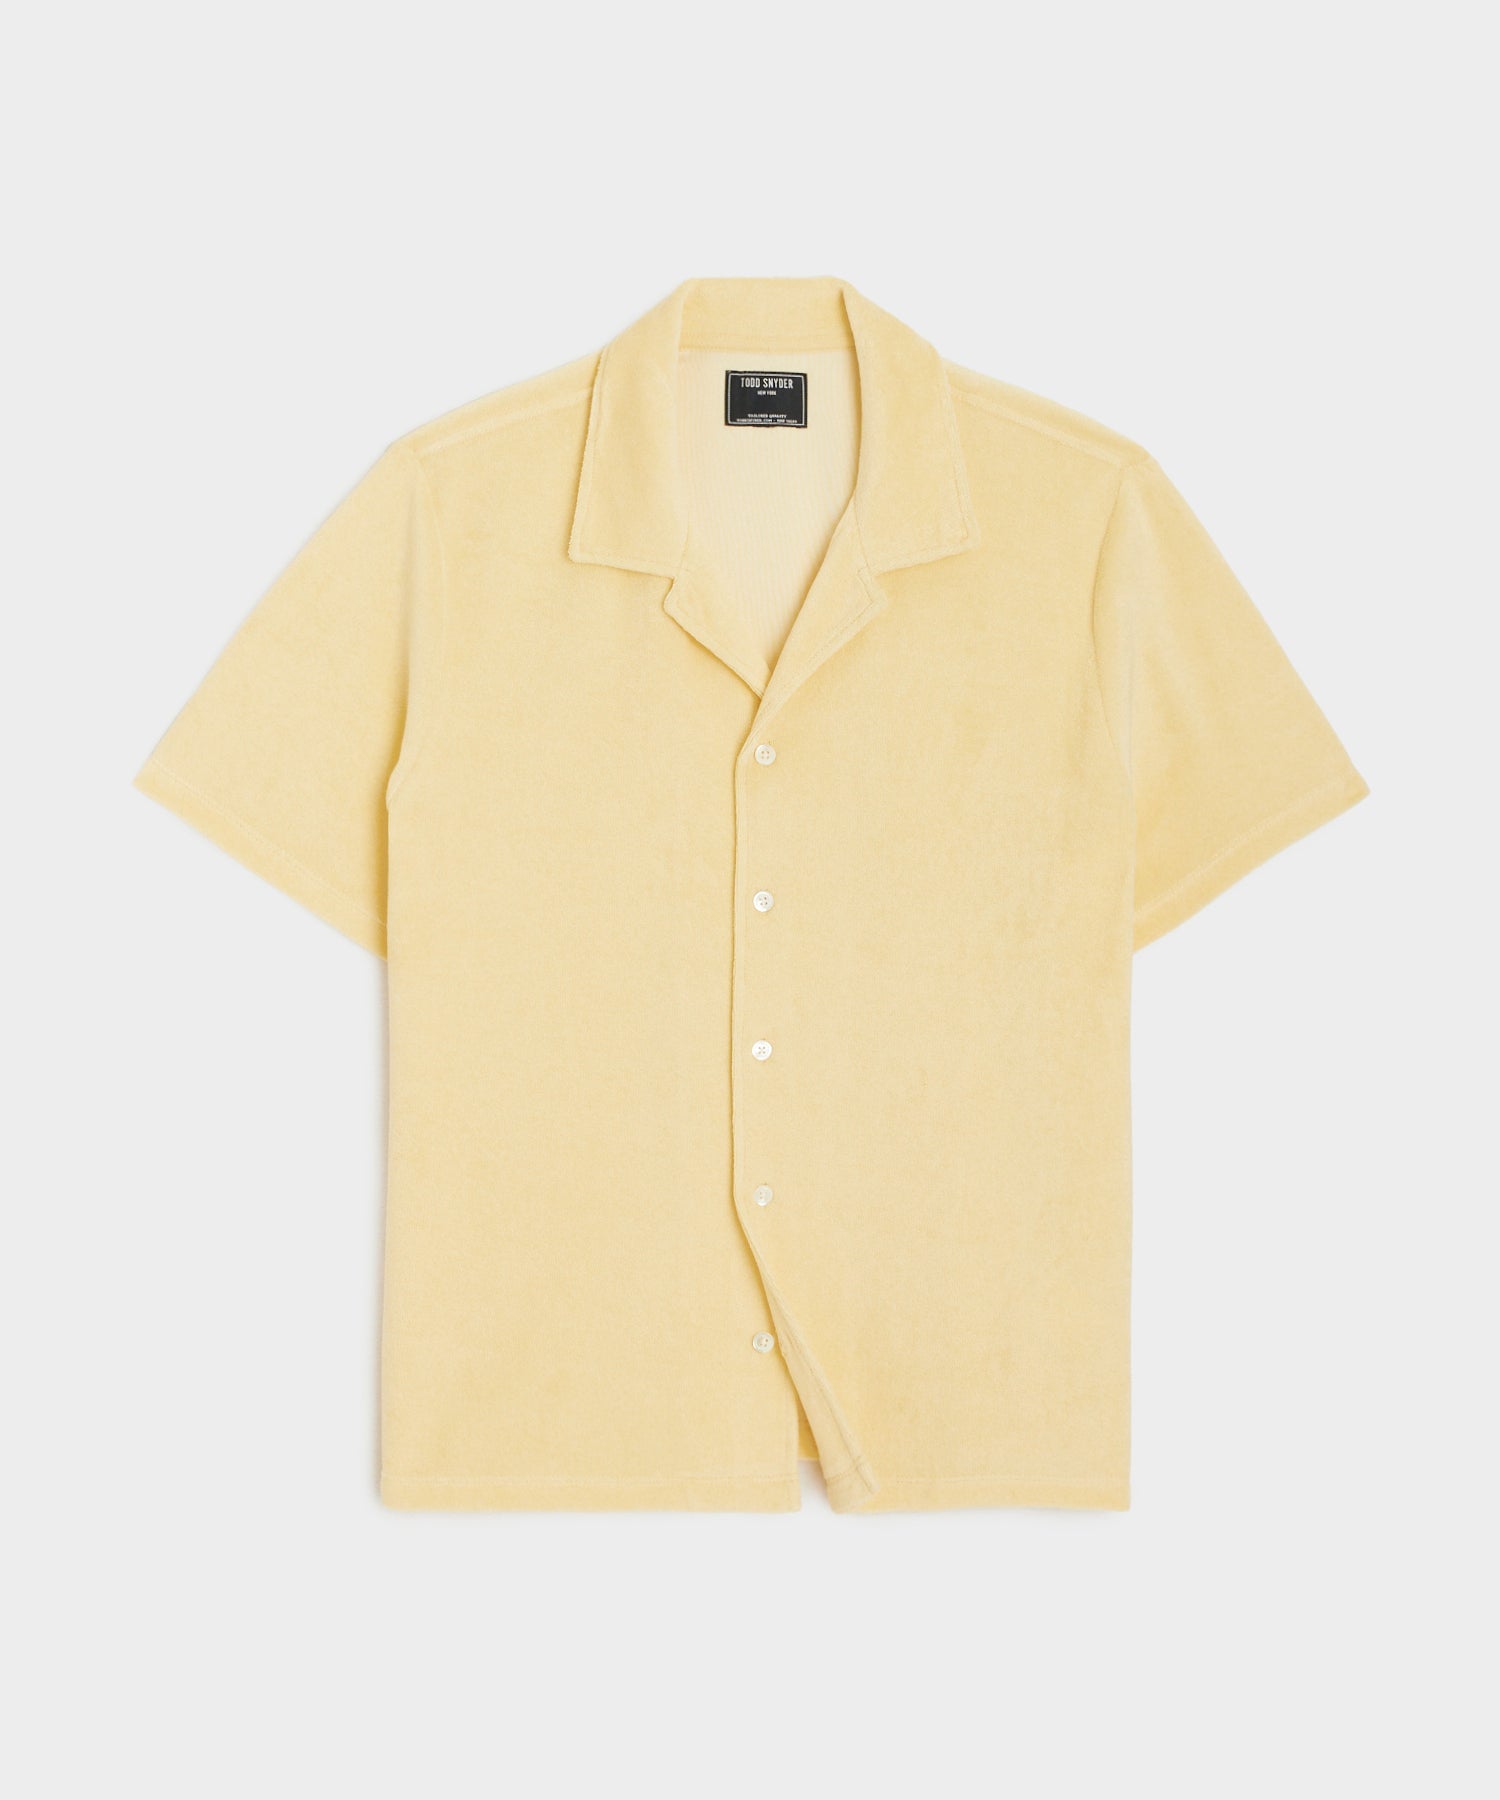 Terry Cabana Polo Shirt in Lemon